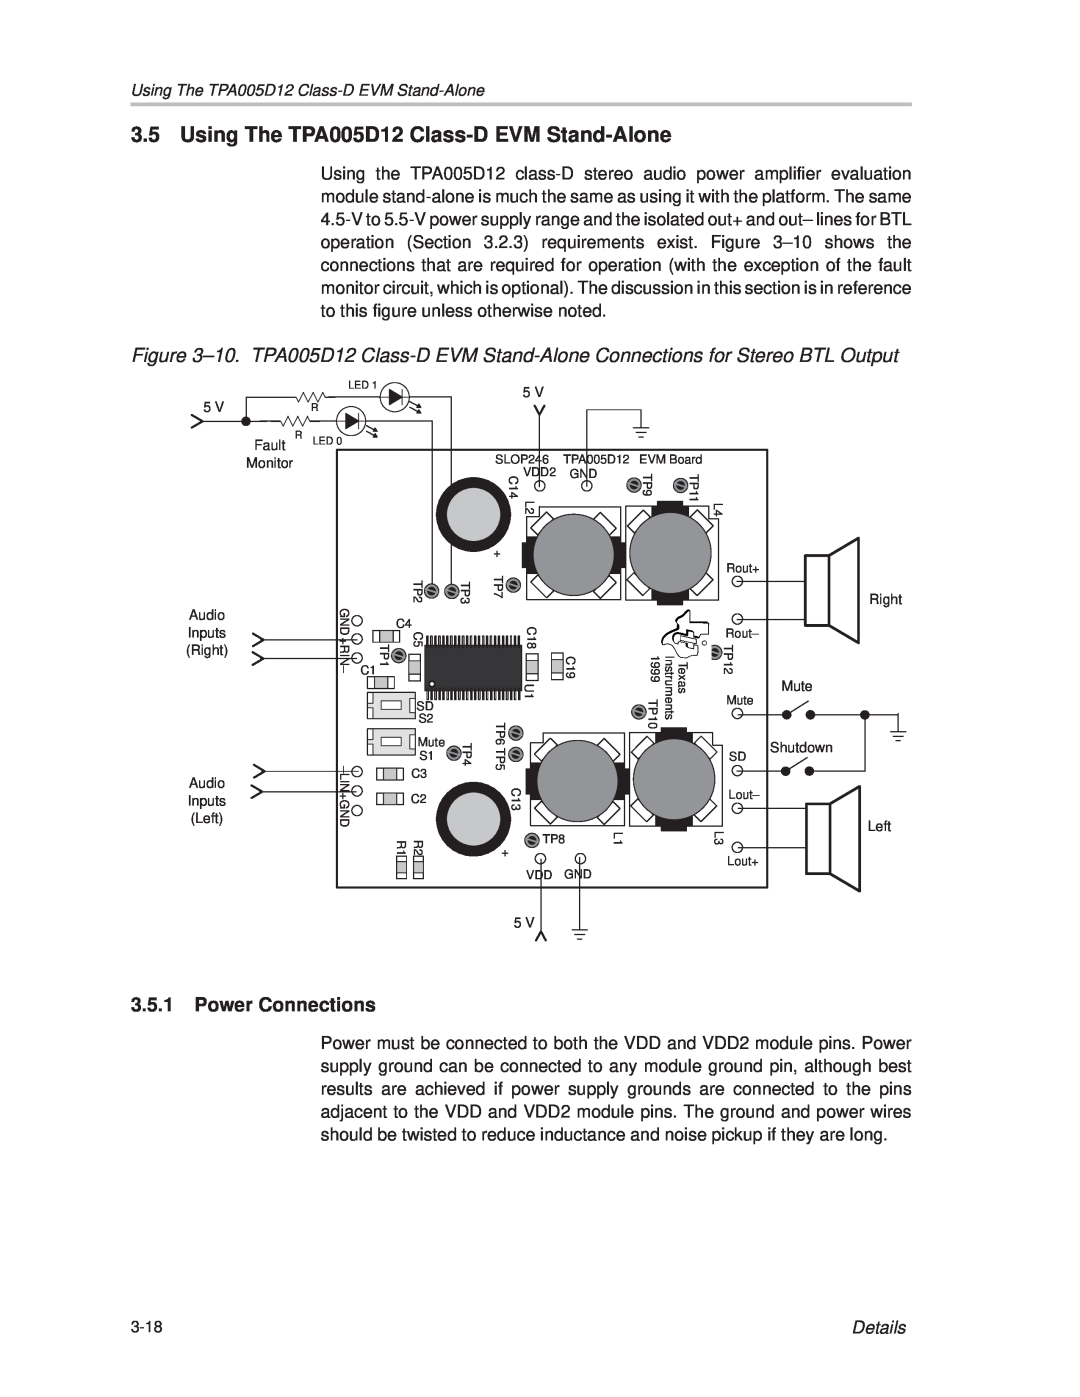 Texas Instruments TPA005D12 manual Details, Monitor 